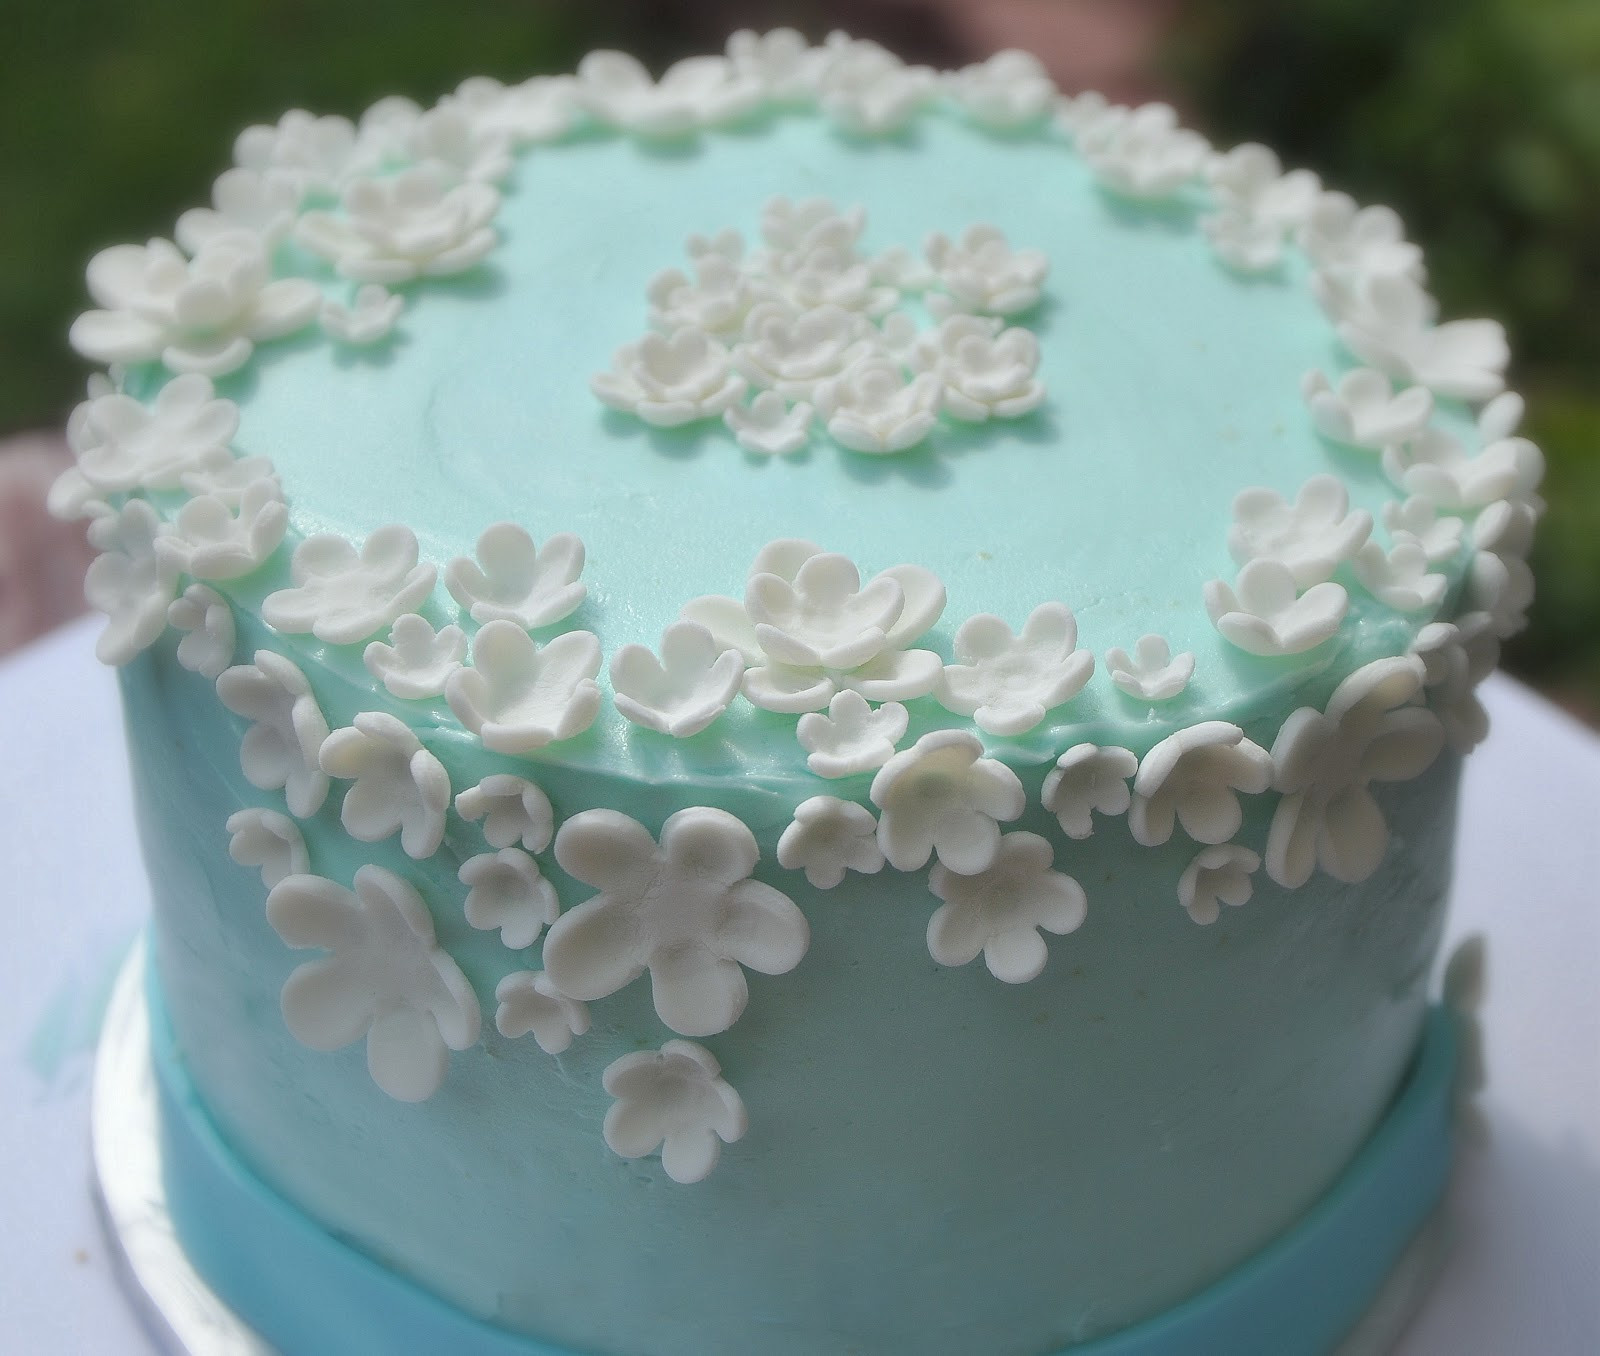 Best ideas about Floral Birthday Cake
. Save or Pin TurtleCraftyGirl Flower Birthday Cake Now.